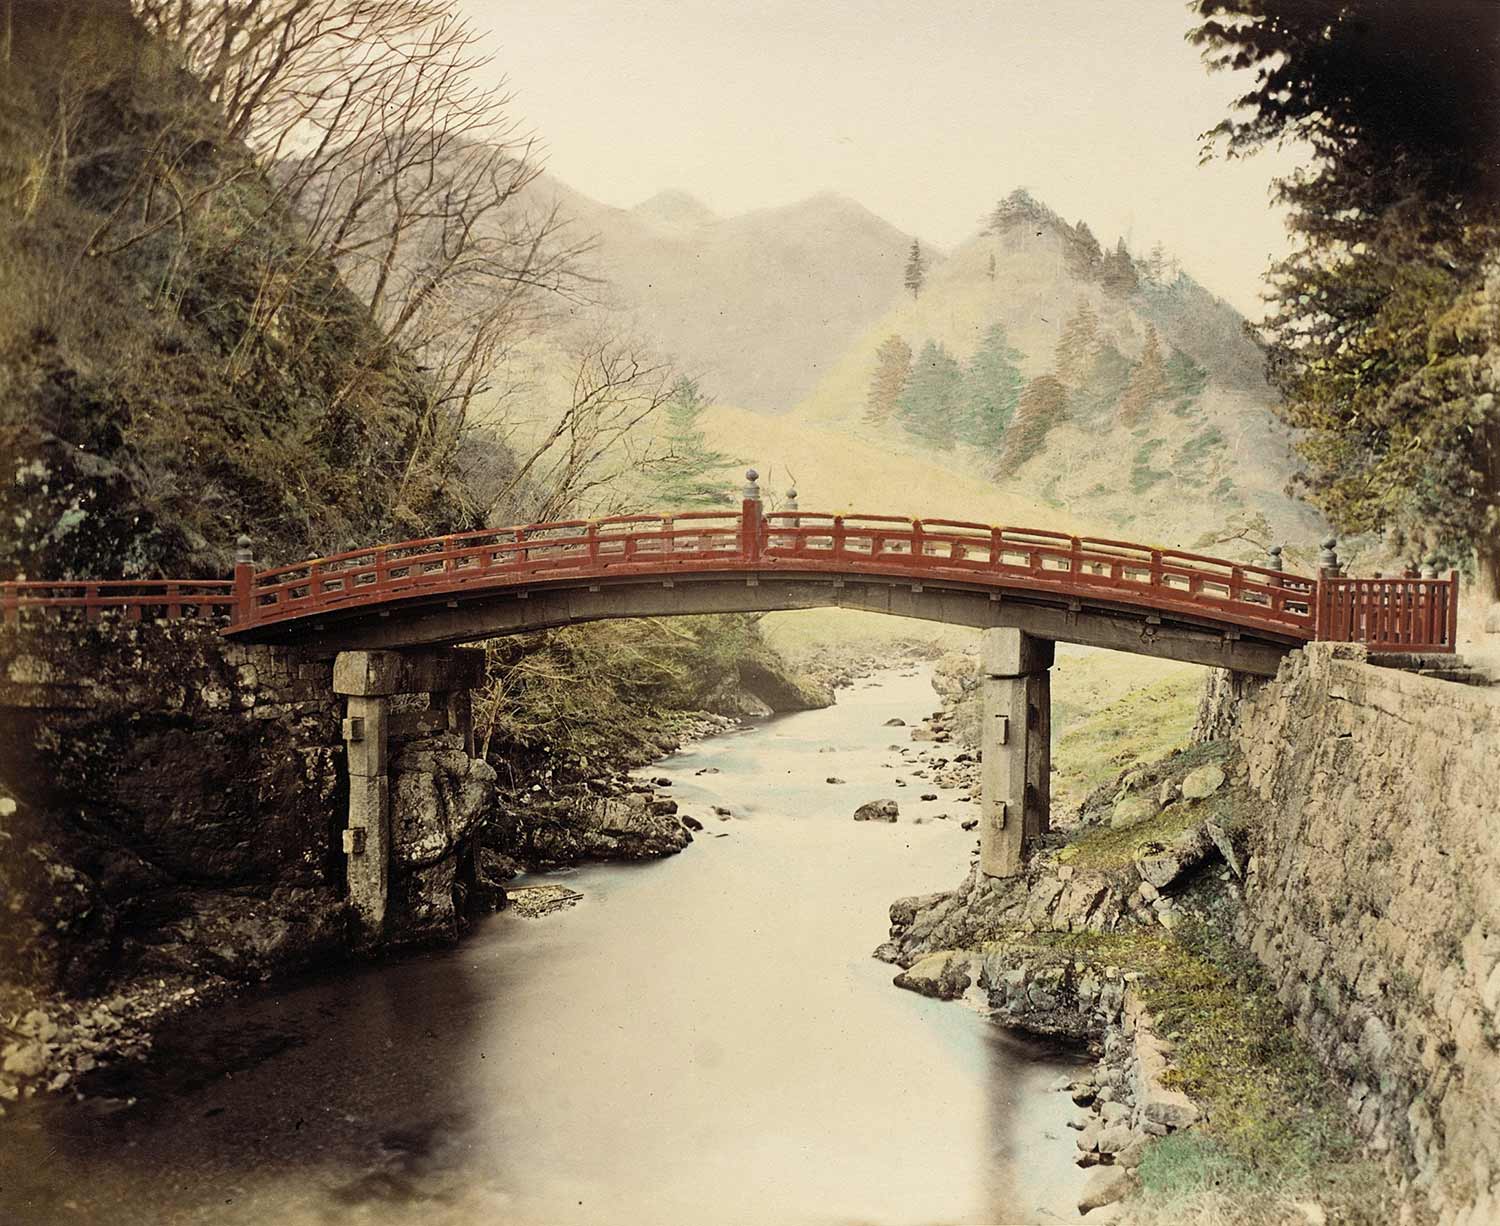 sacred bridge over a river